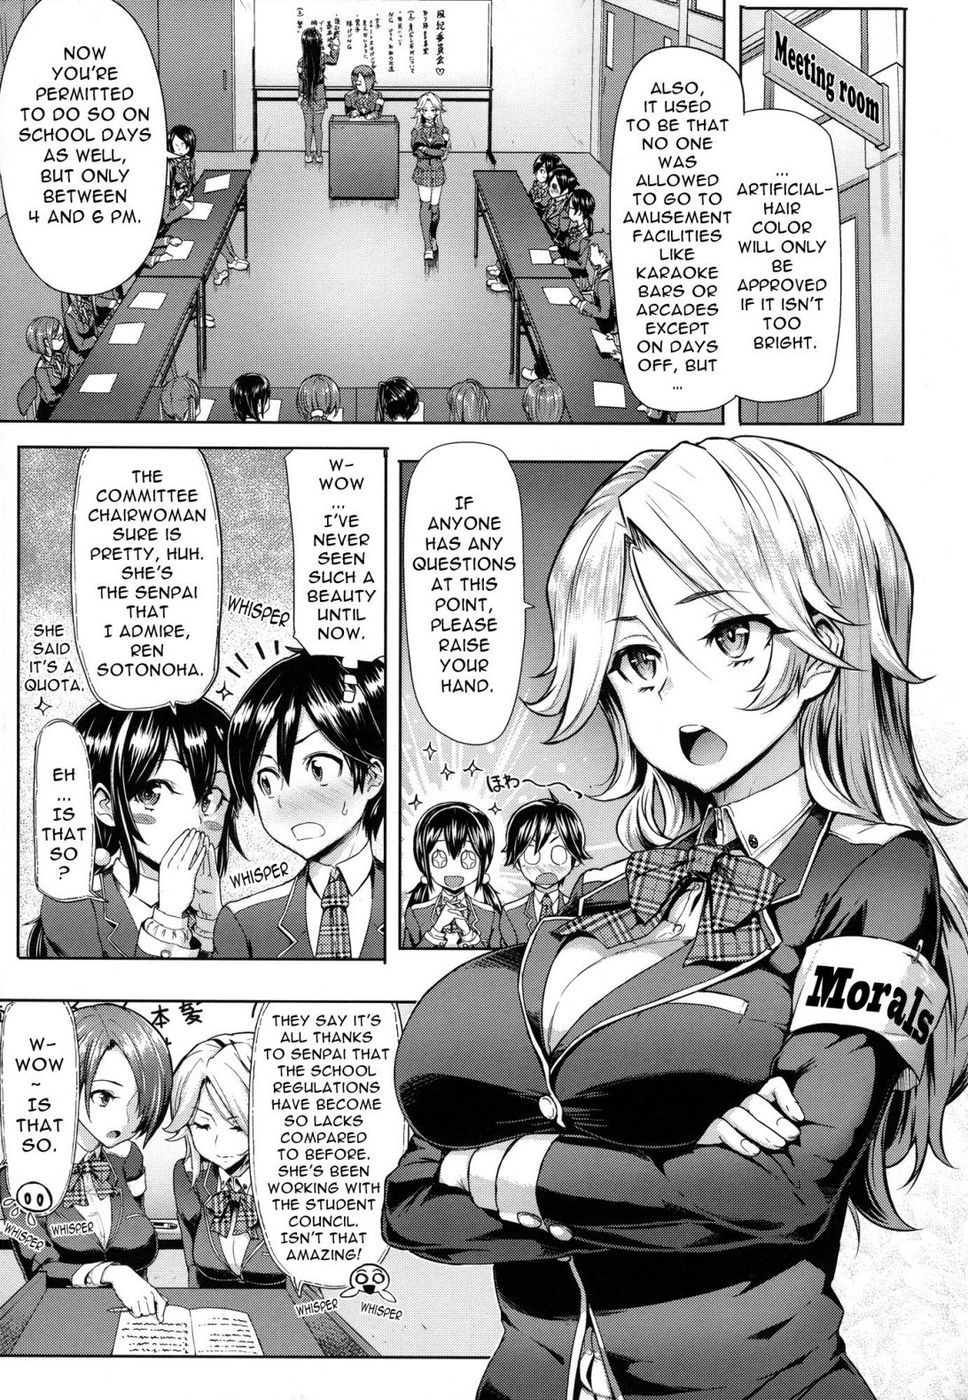 Hentai Manga Comic-Limit Break 3-Chapter 2-Corruption Of Morals Vol1-3